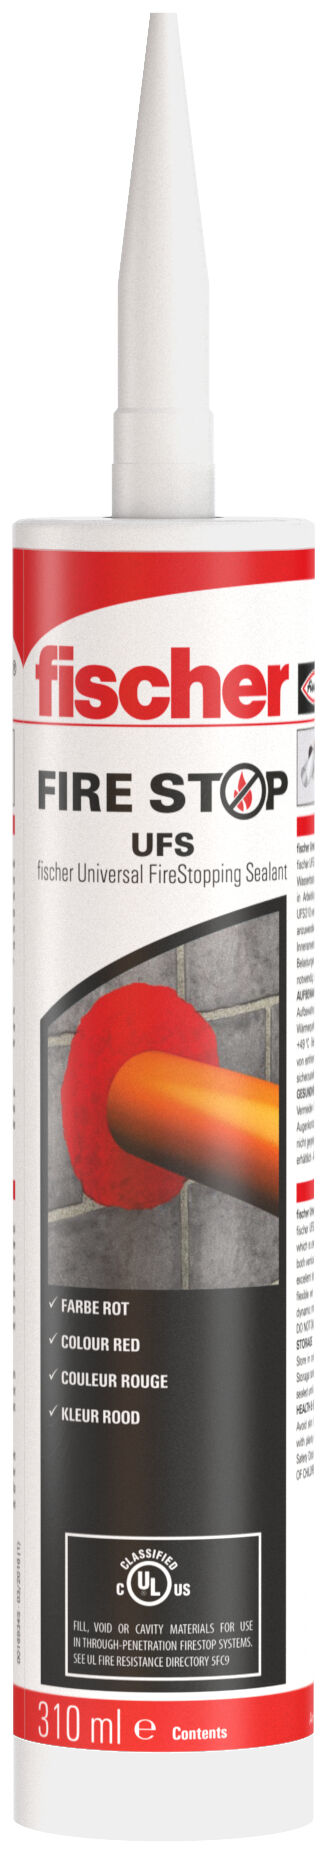 Universal FireStopping Sealant UFS